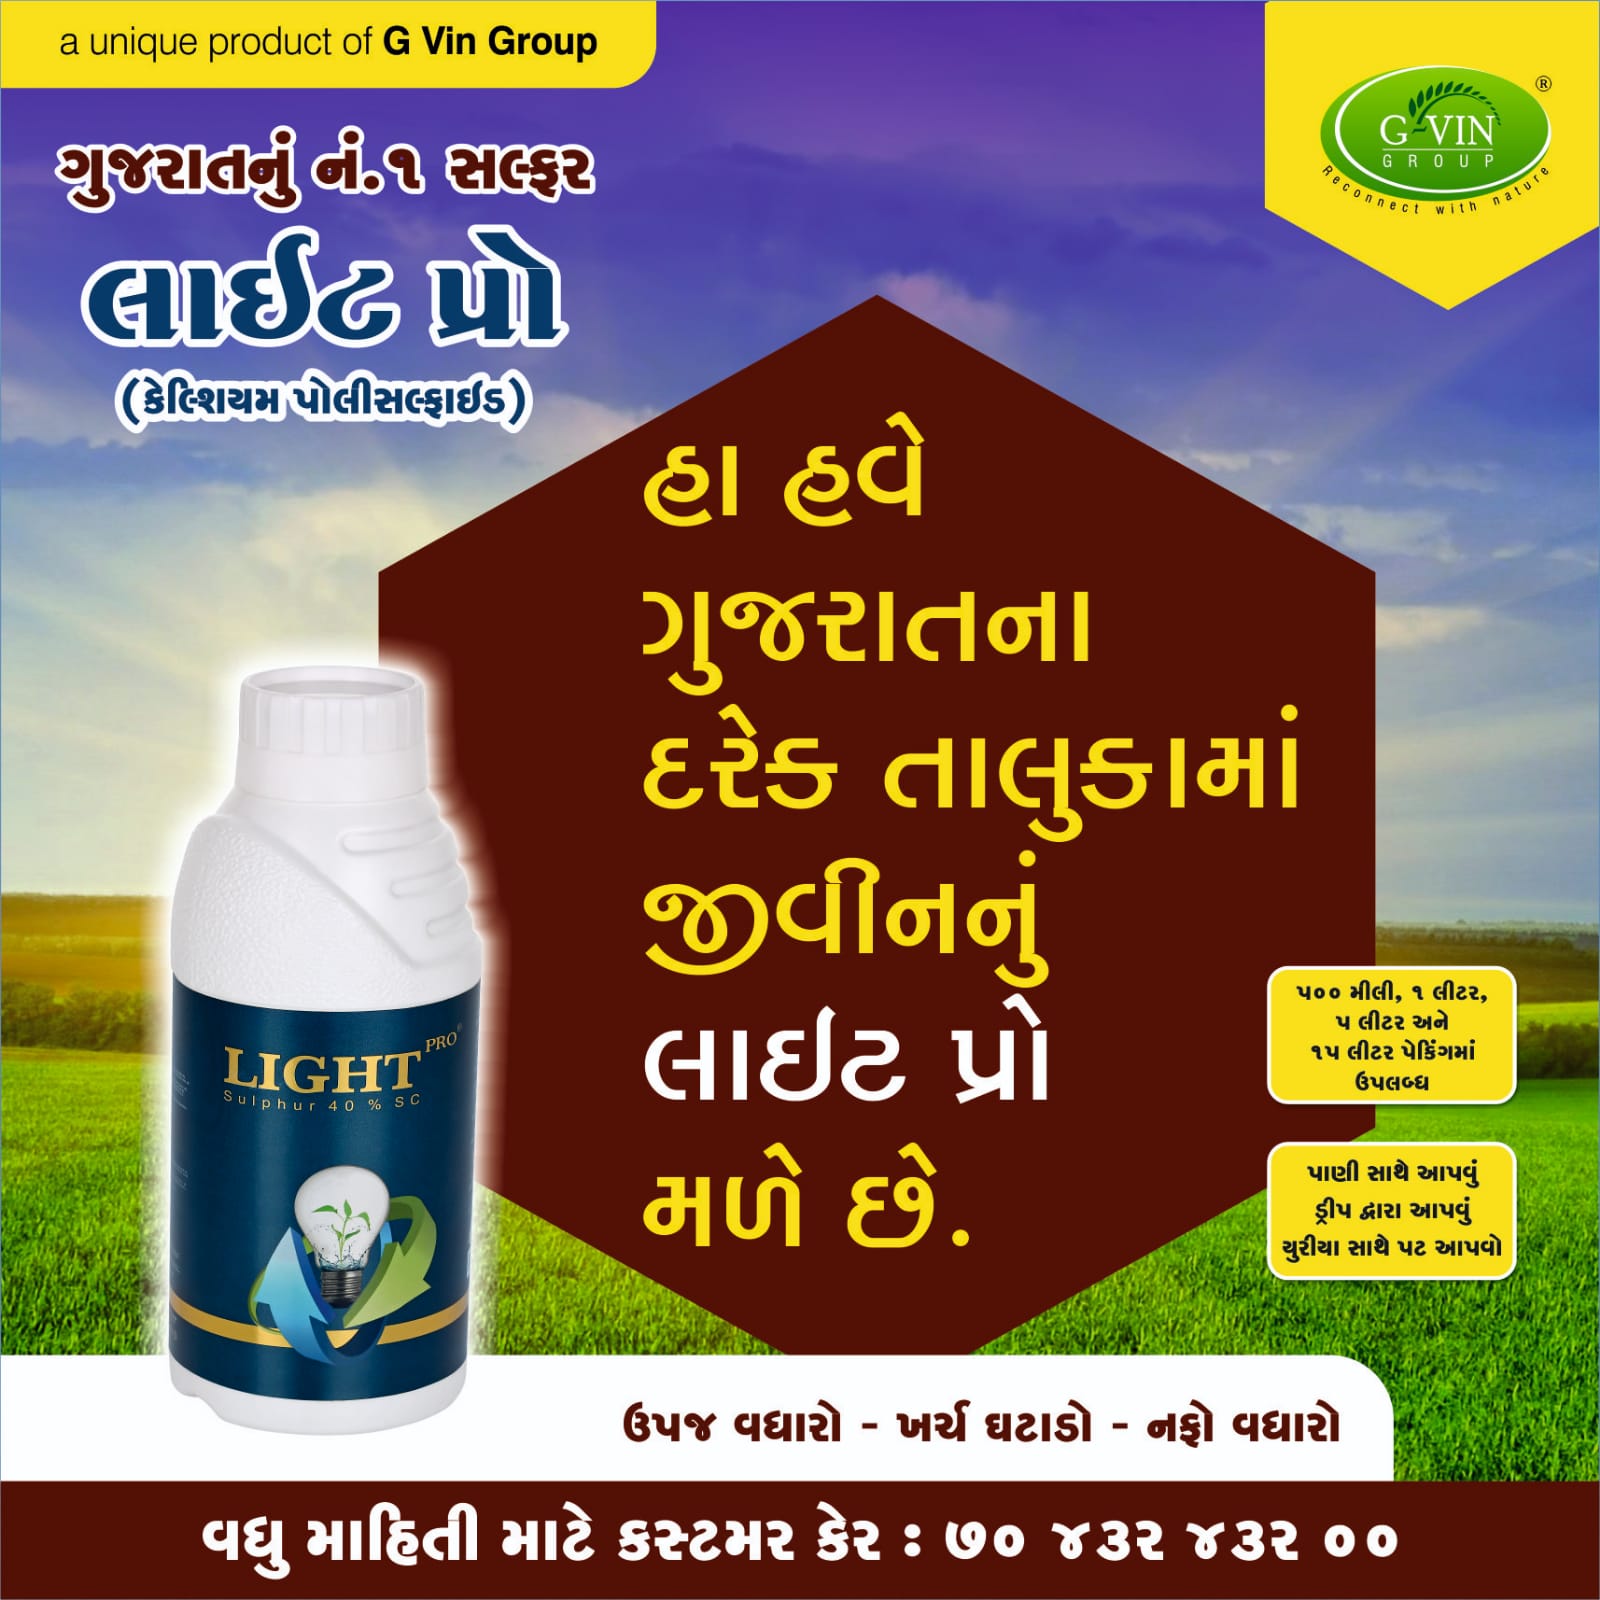 Lightpro is no. 1 sulphur in Gujarat